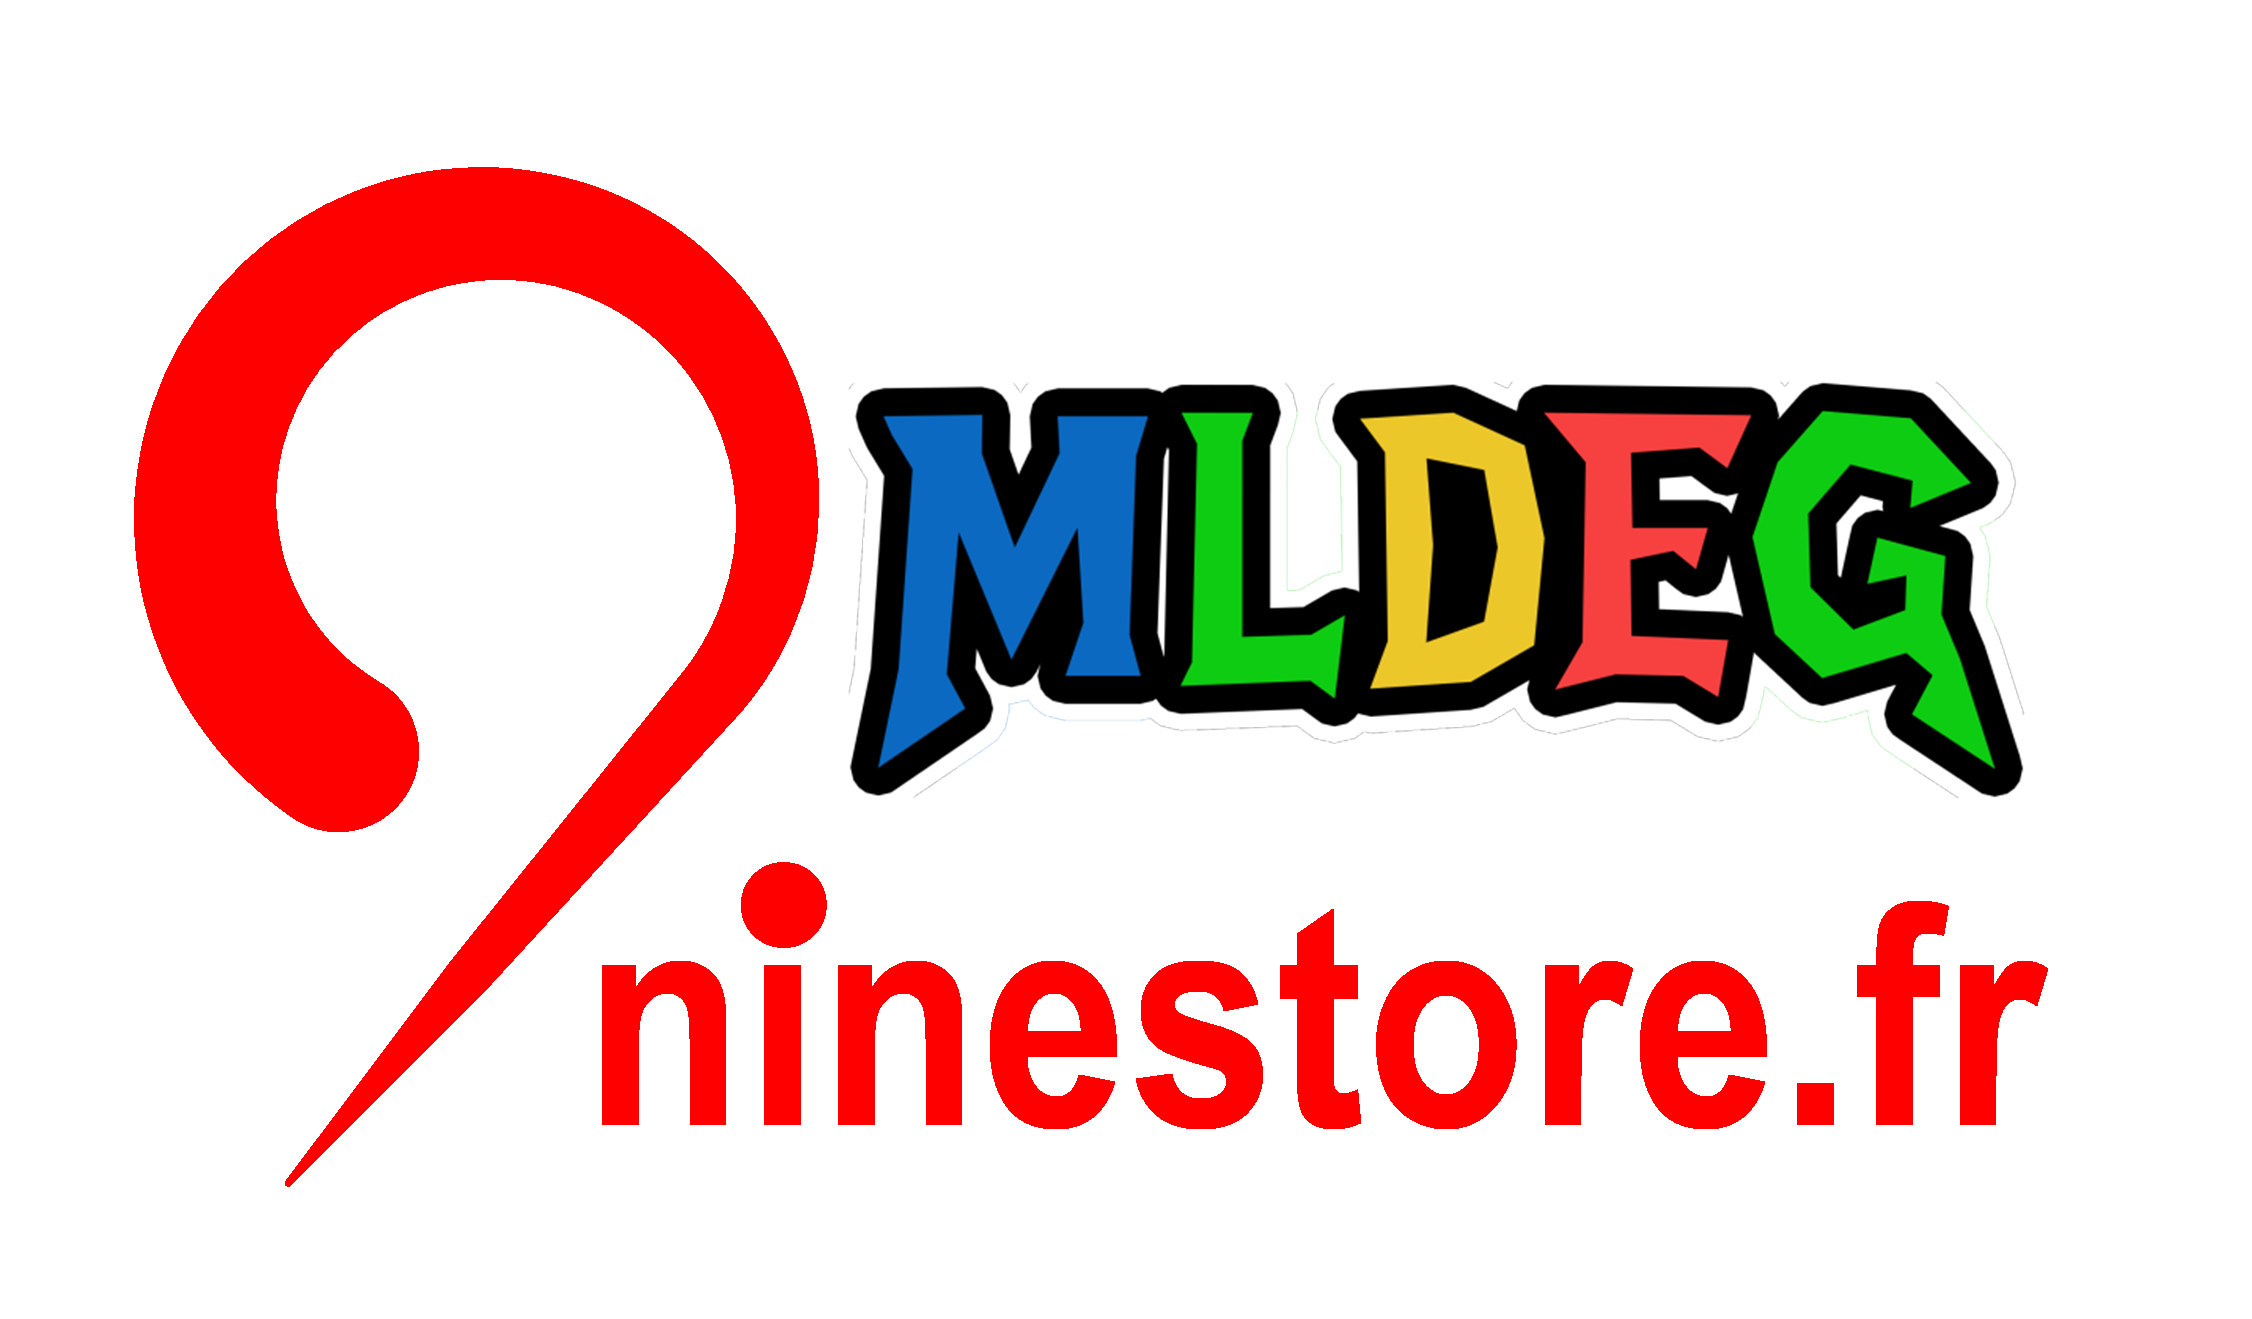 MLDEG x NineStore